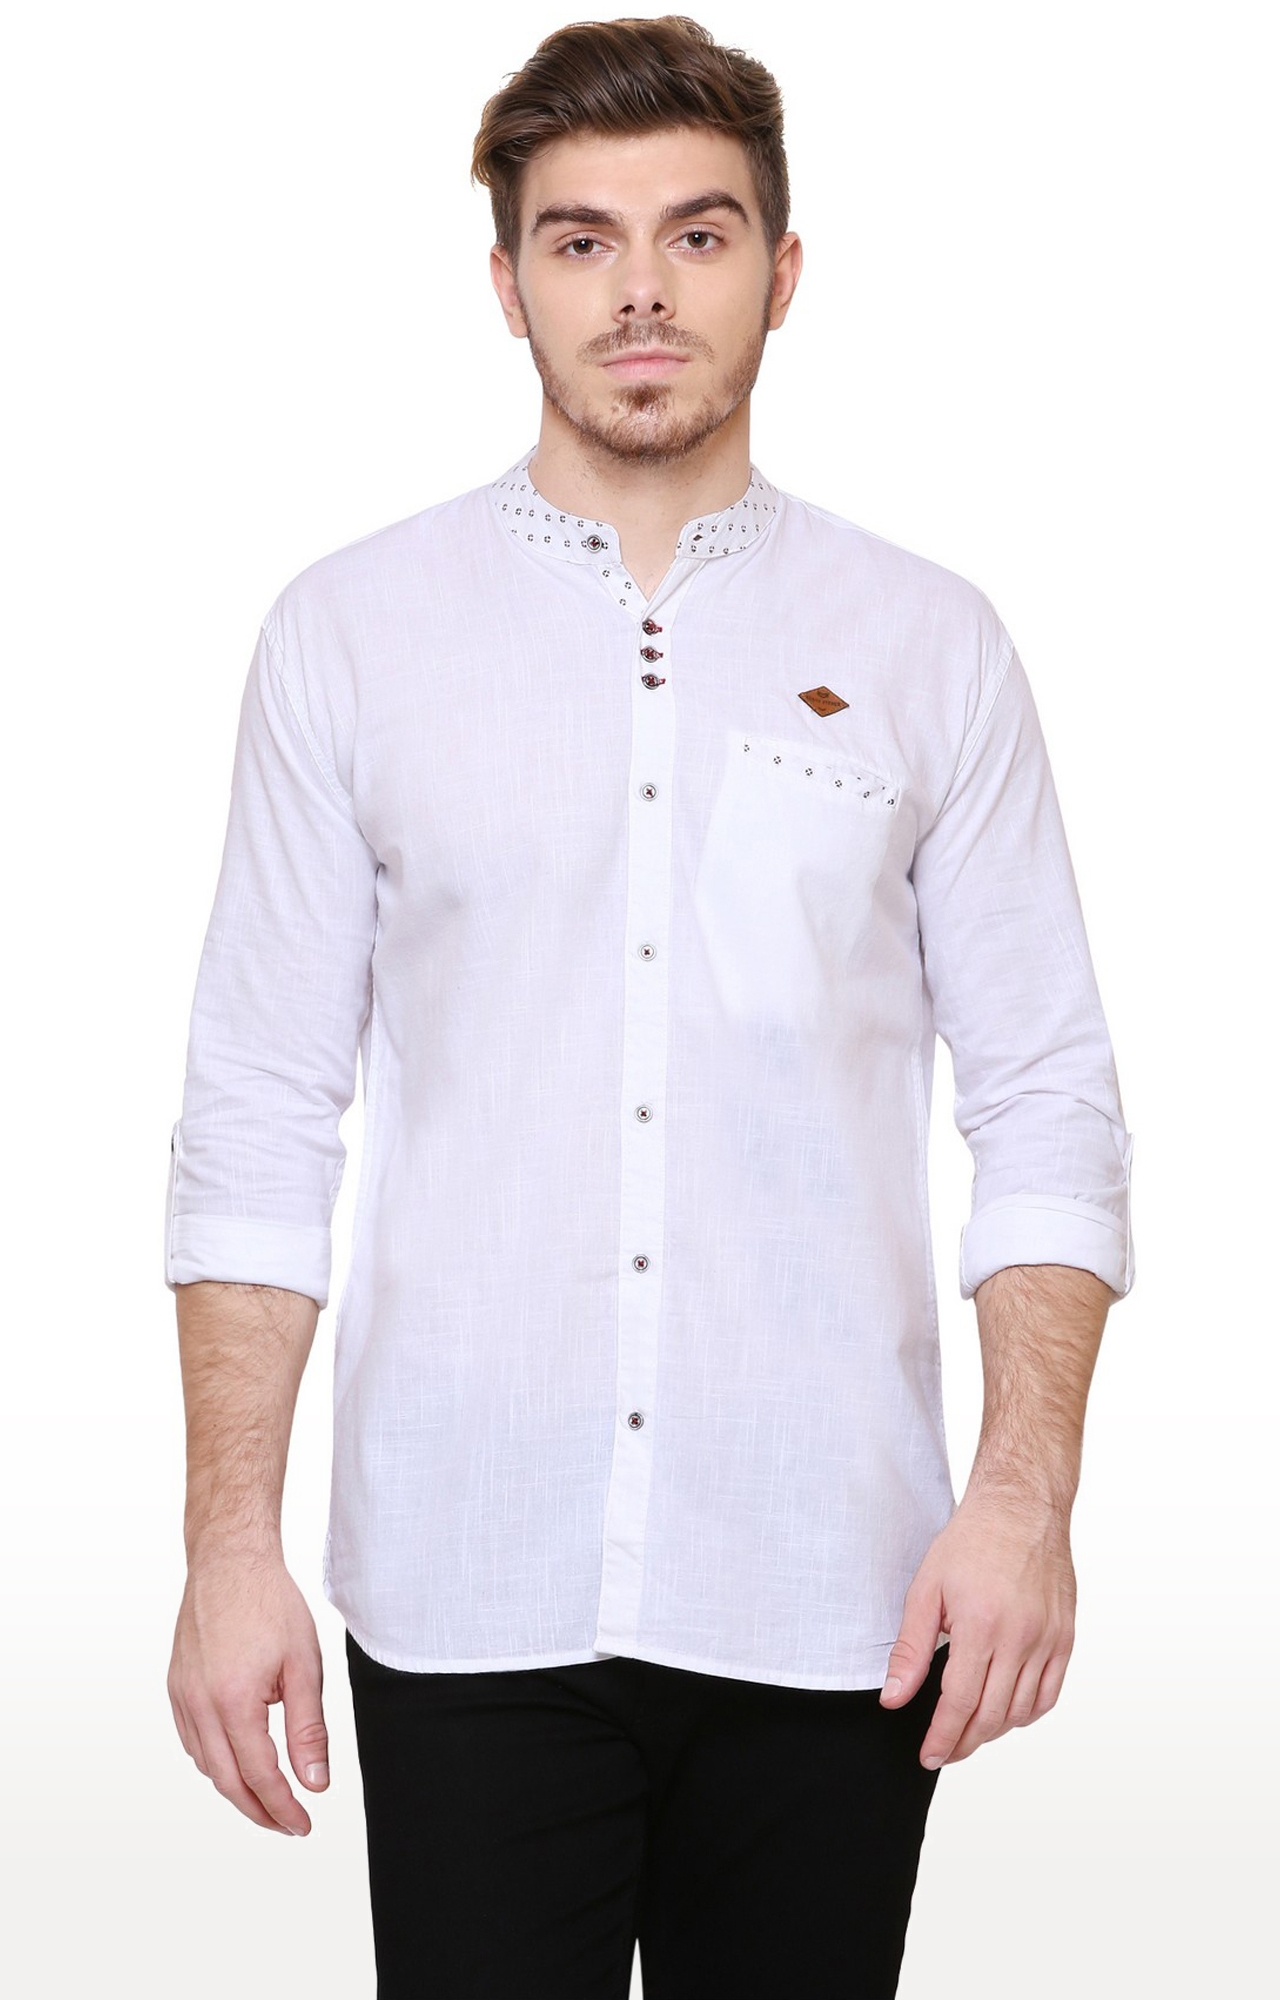 Kuons Avenue Men's White Linen Cotton Shirt